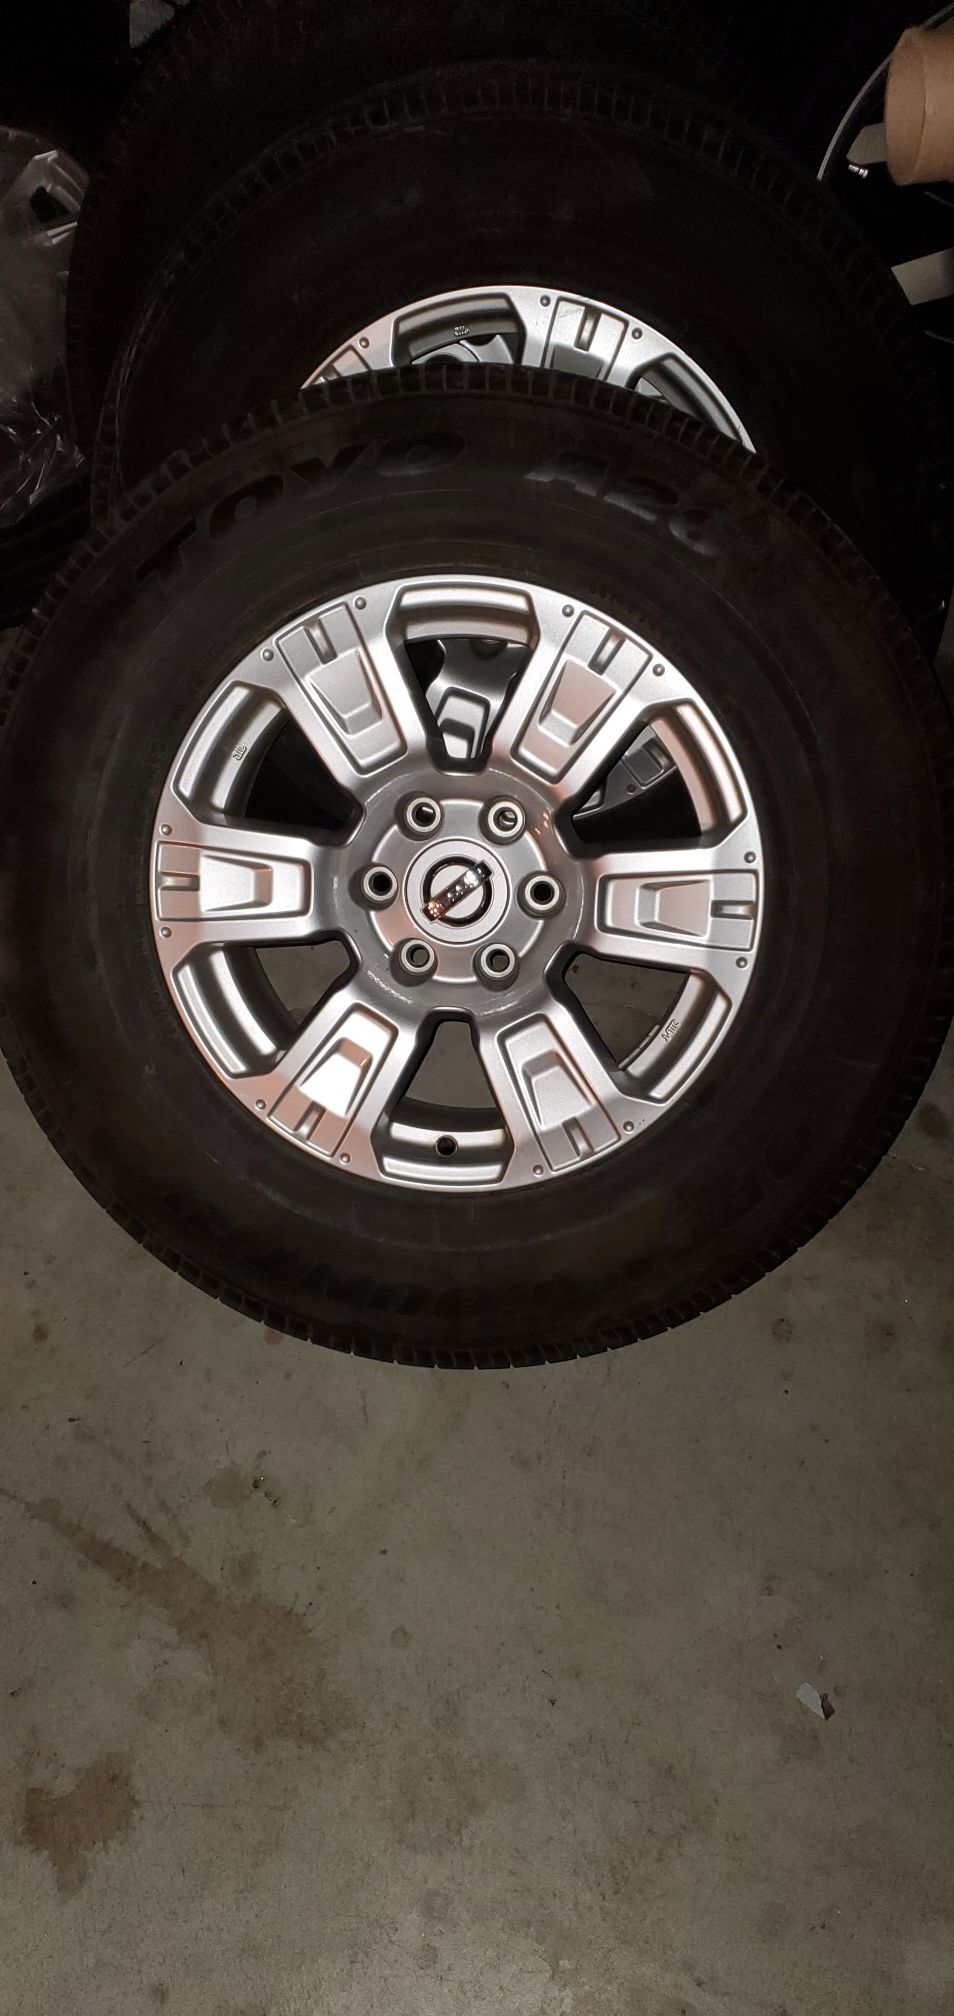 2017 Stock Nissan Titan 18" Rims and Tires